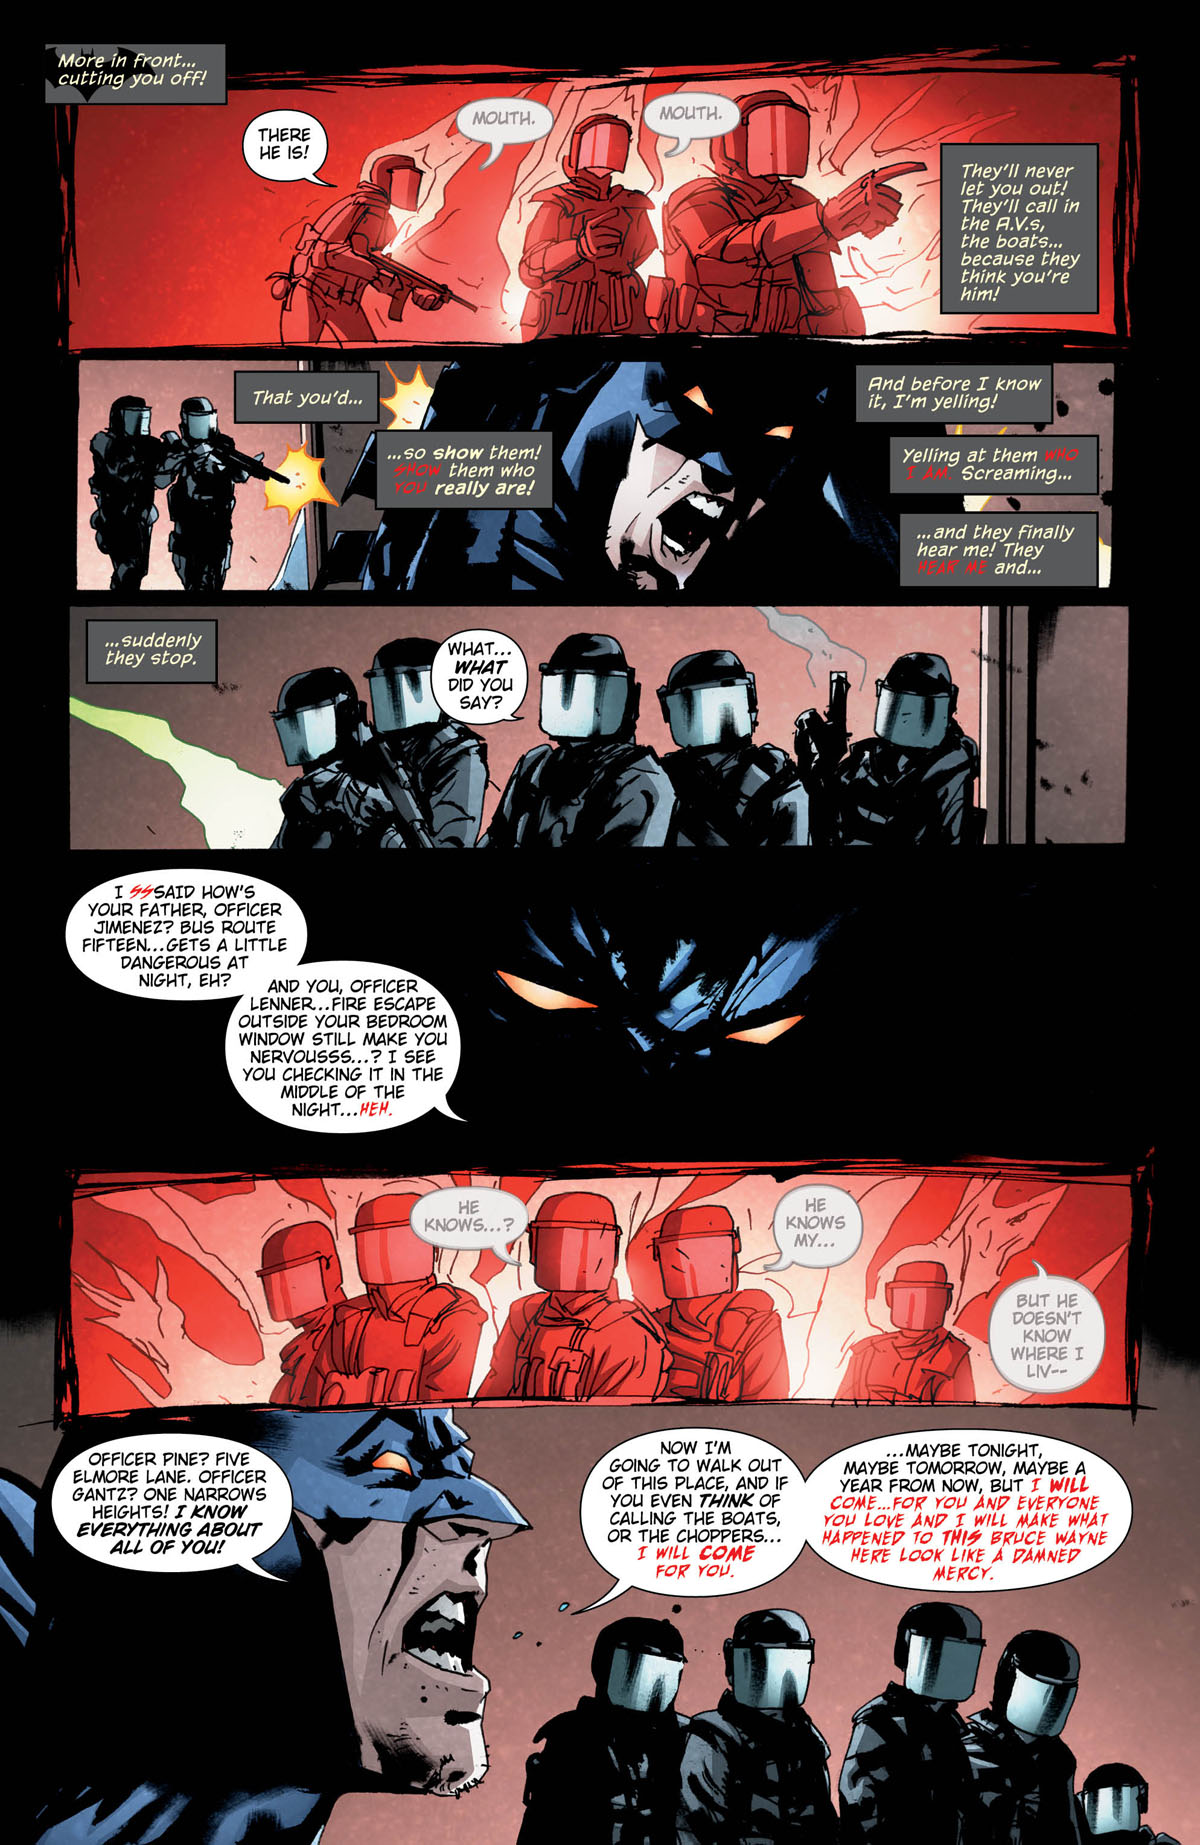 The Batman Who Laughs # 5 page 5